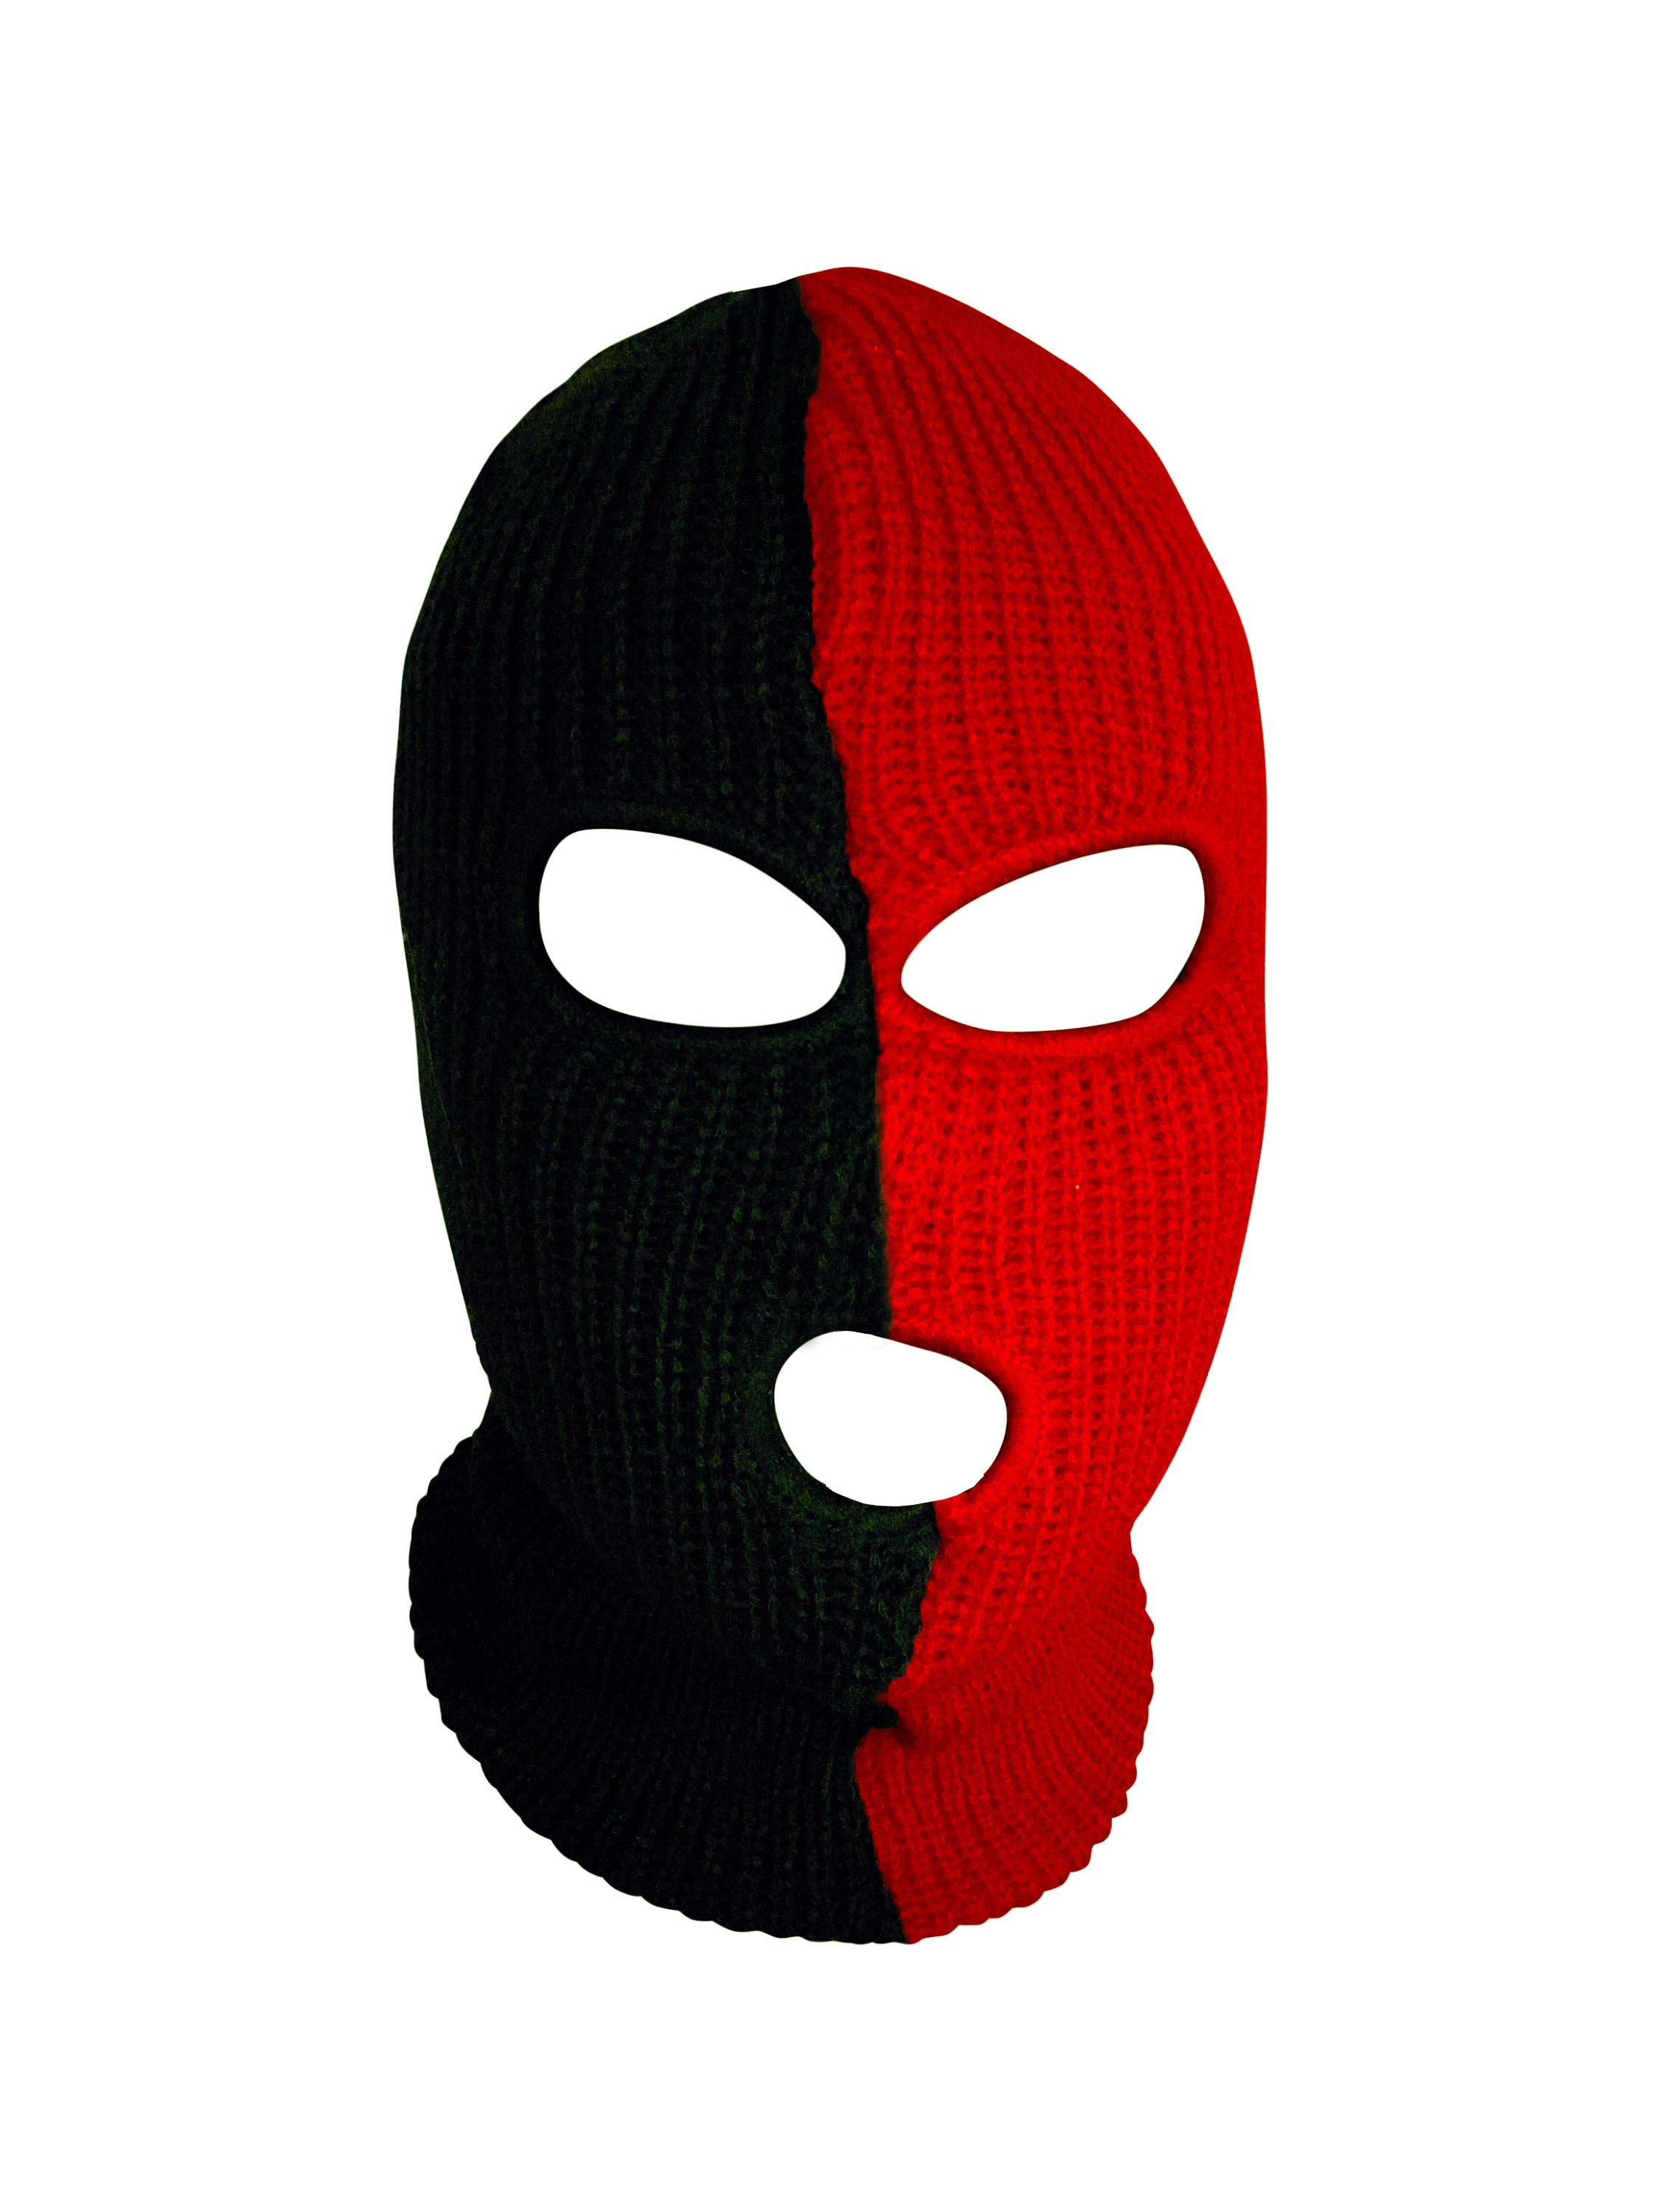 Ski Mask Red and Black Two Tone 3 Holes Half Red Half Black